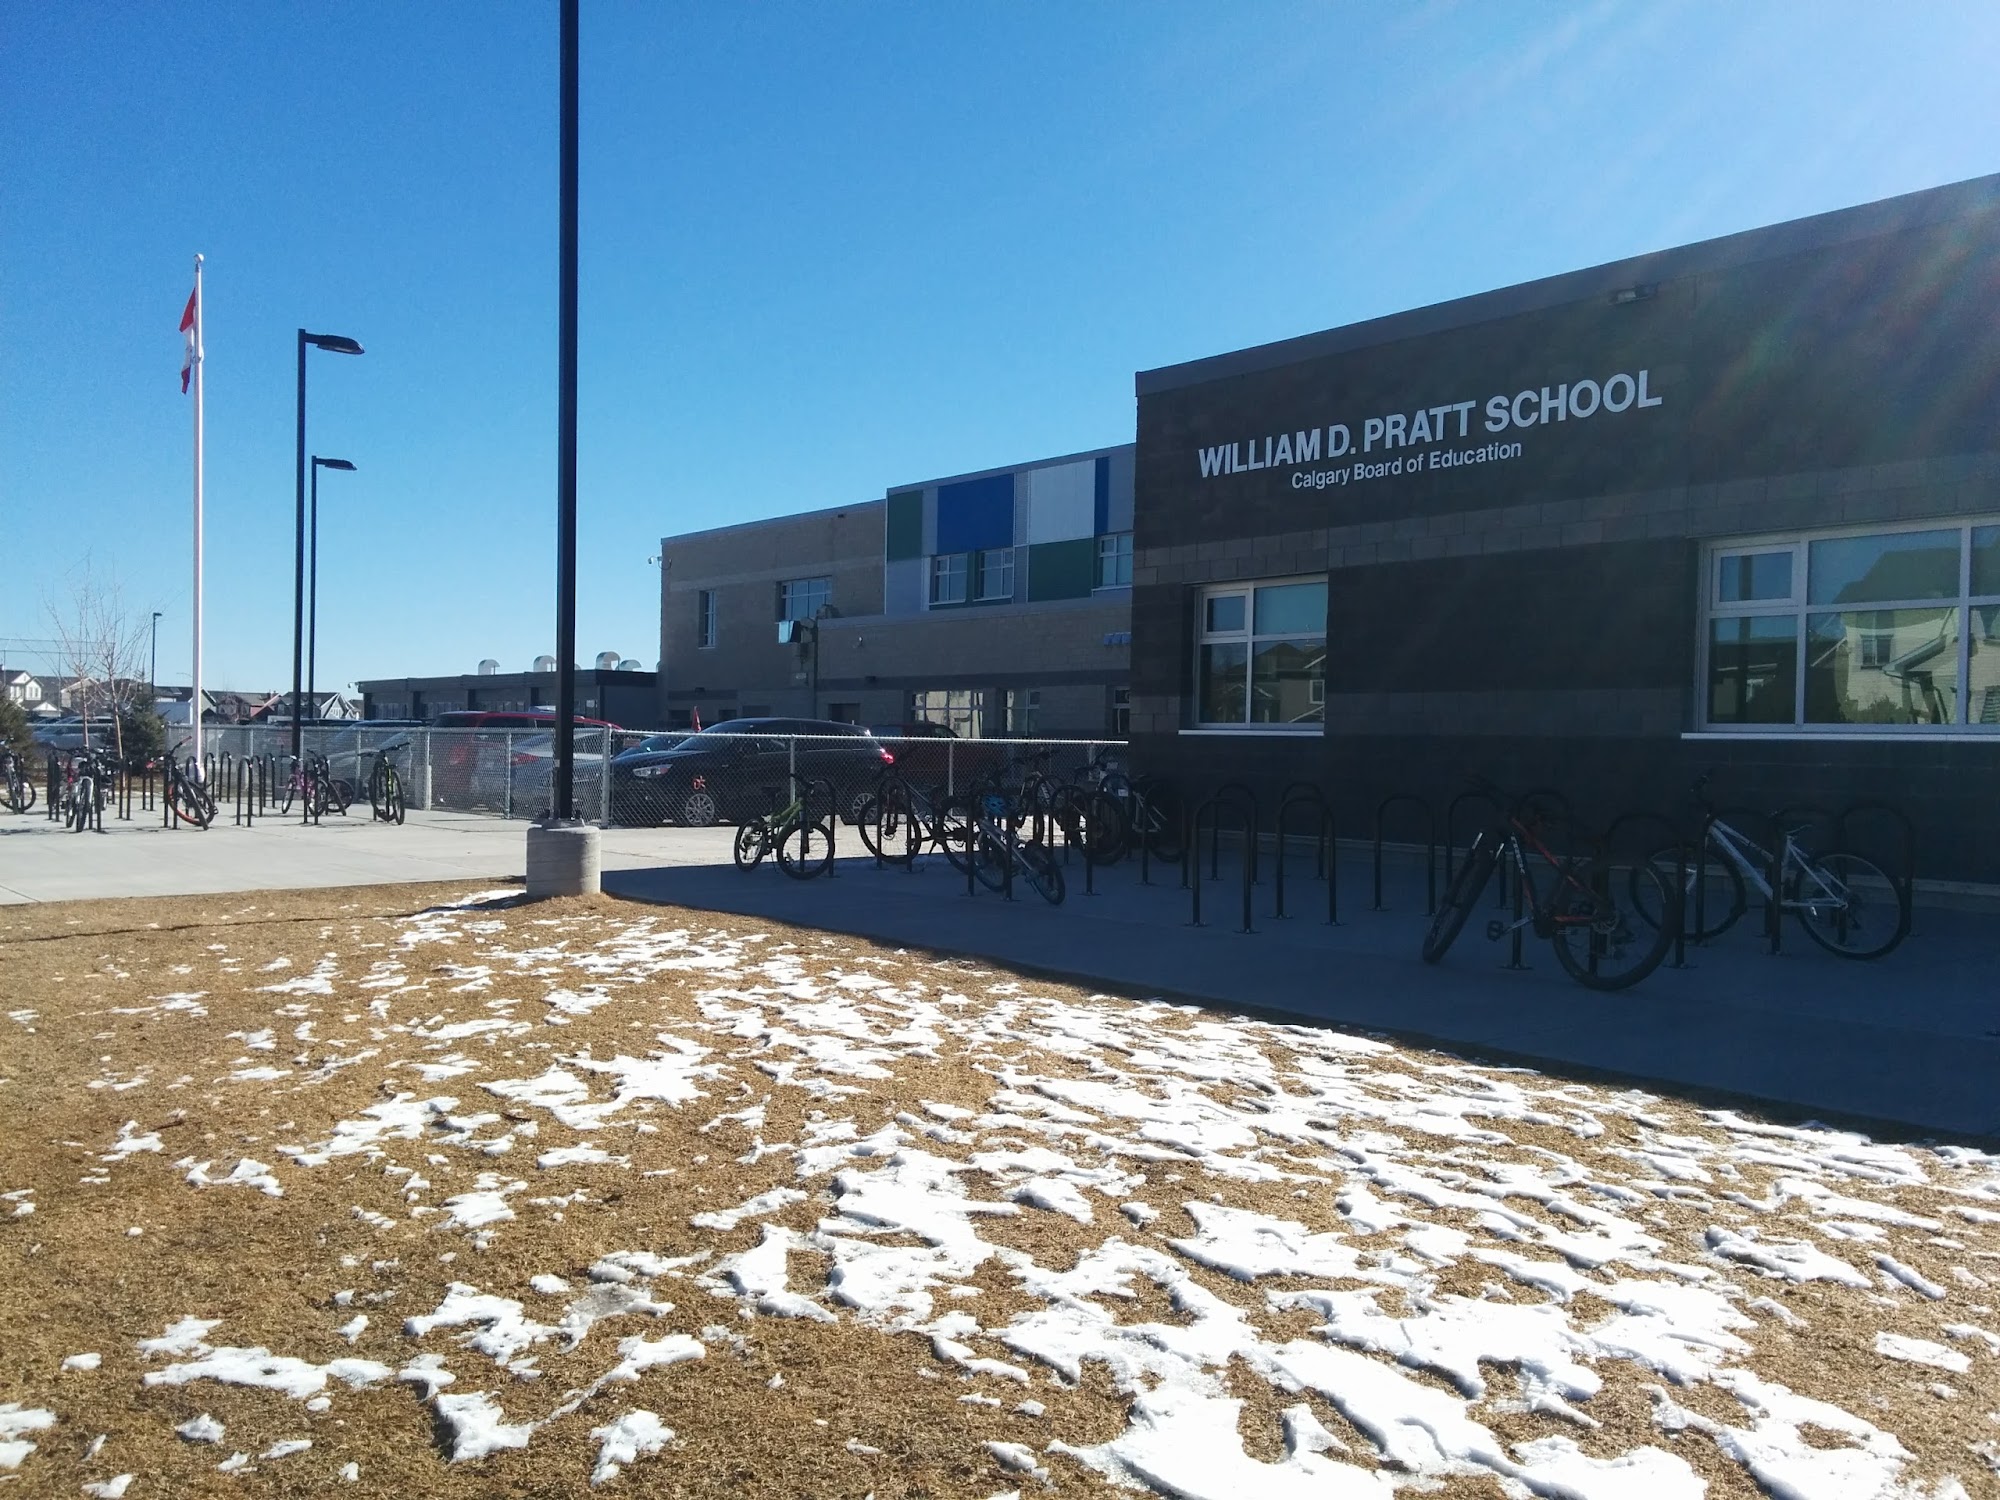 William D. Pratt School | Calgary Board of Education